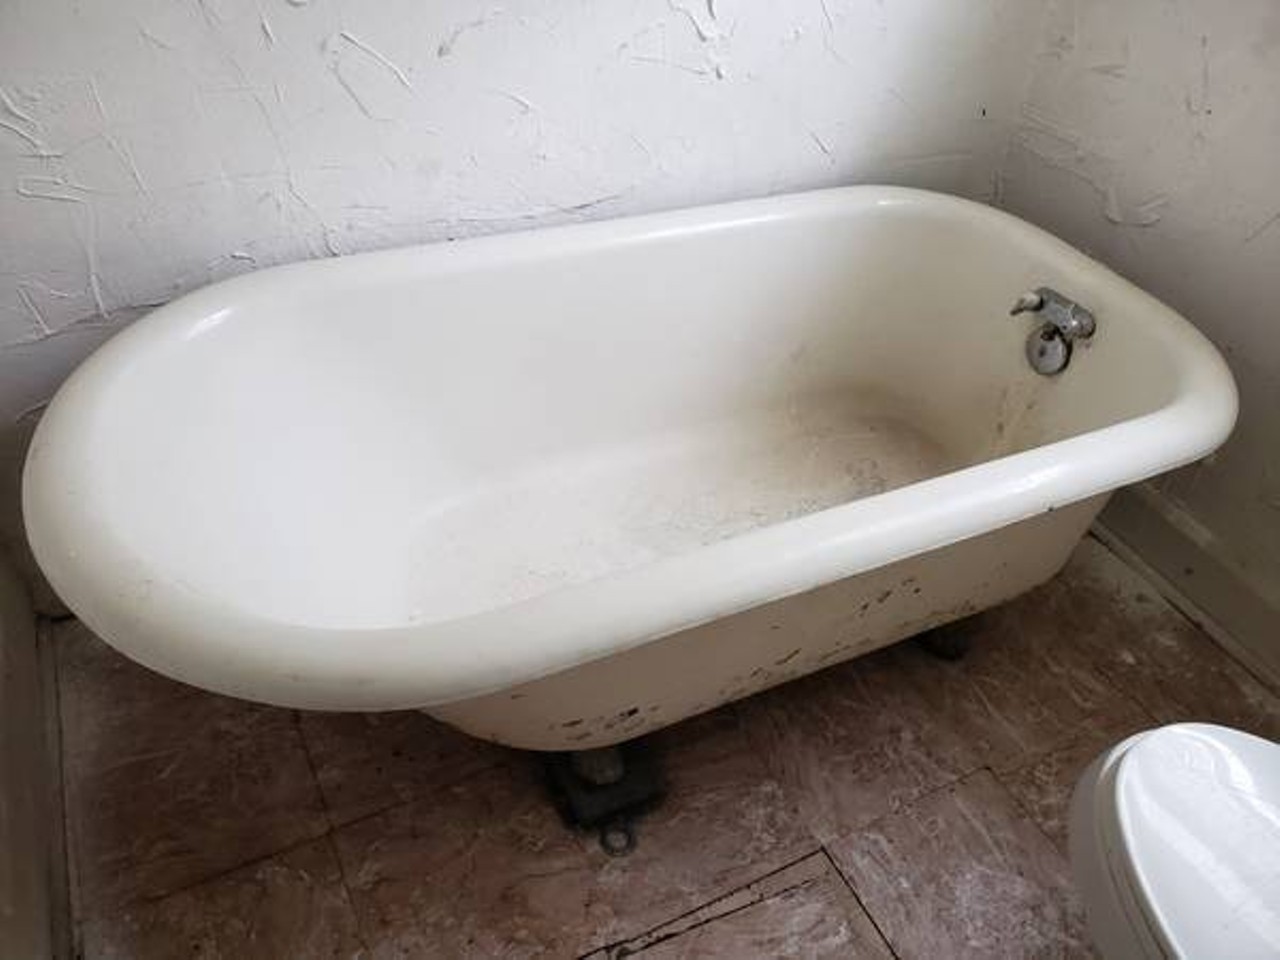 2 Victorian Style Clawfoot Bathtubs ($1000)
Because who doesn&#146;t need extra bathtubs?
Photo via  Craigslist